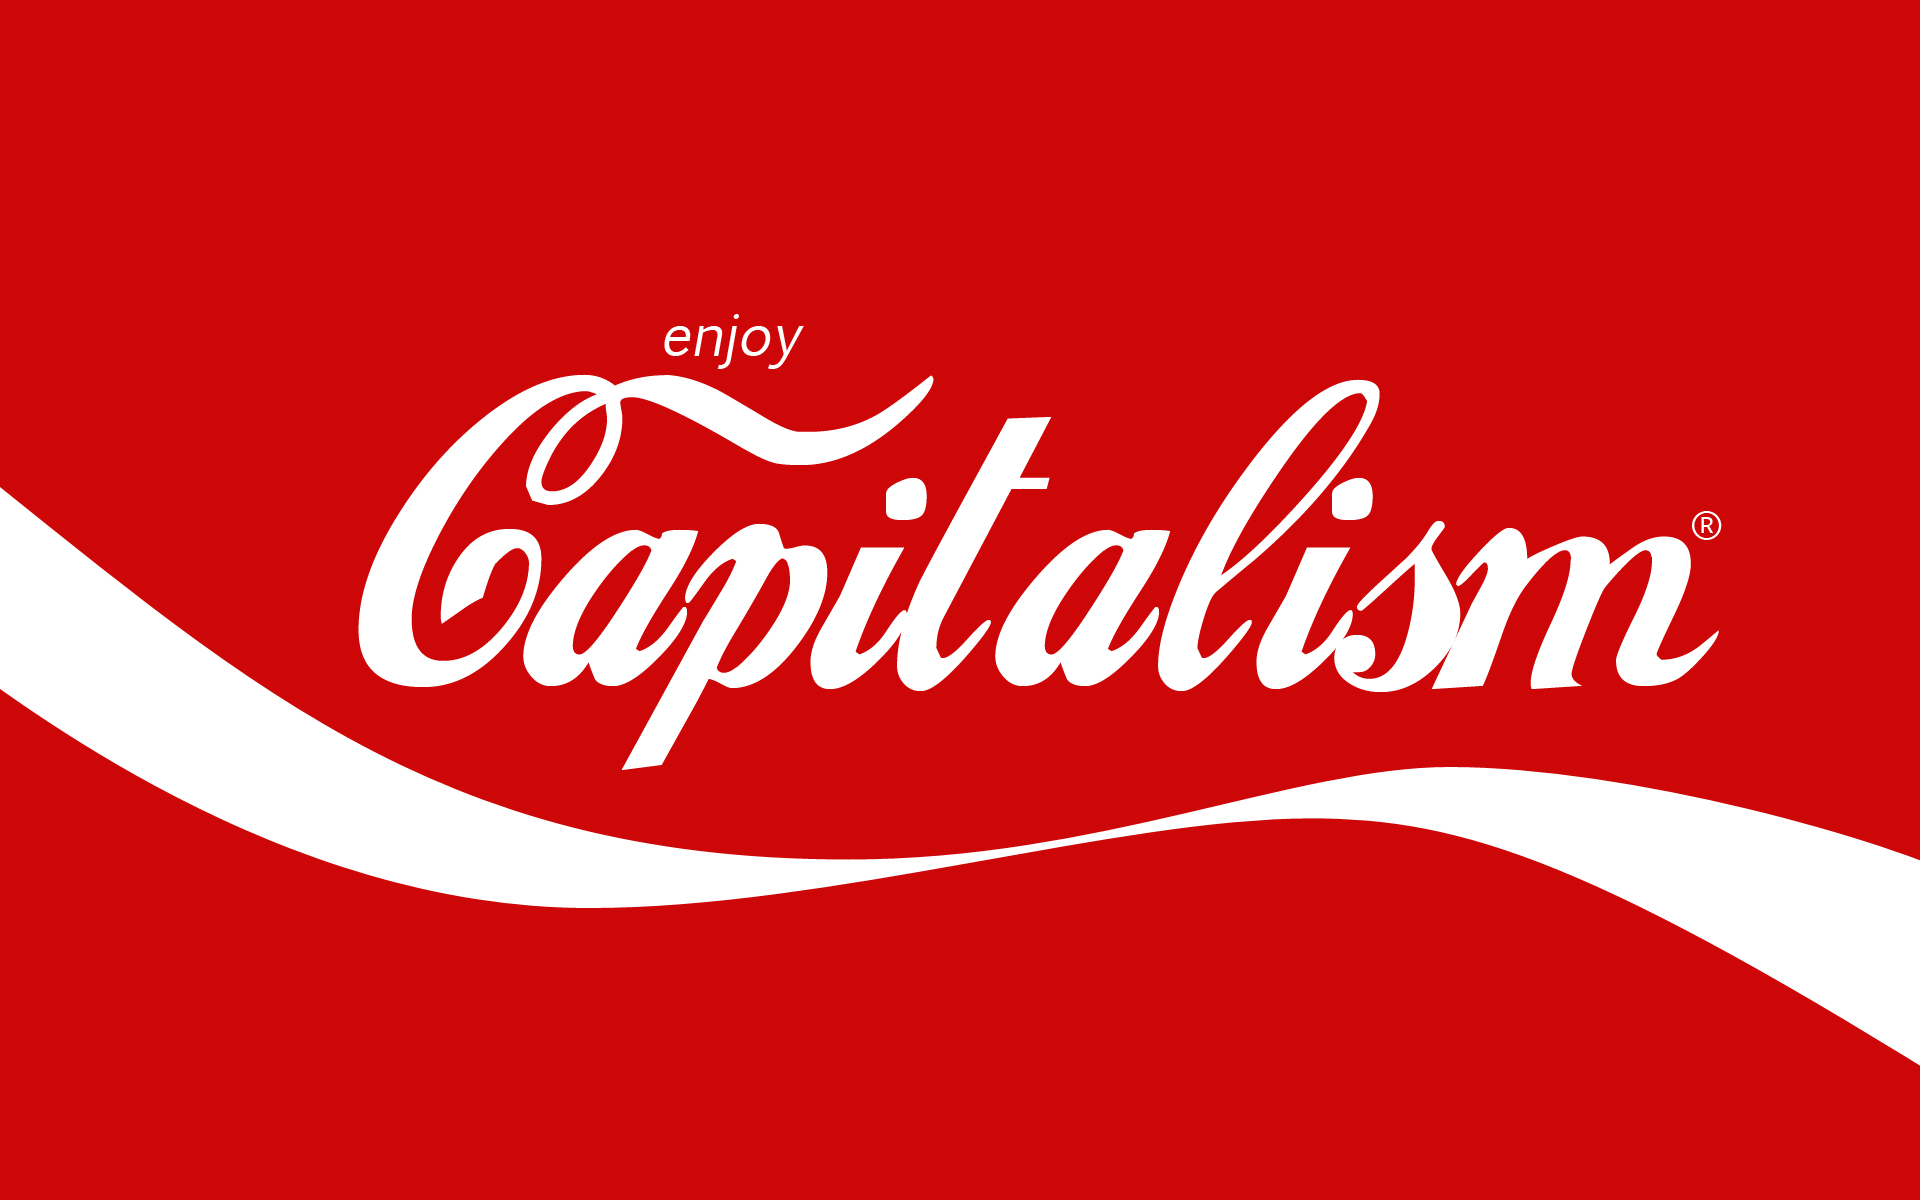 Capitalismo WP ENDECS